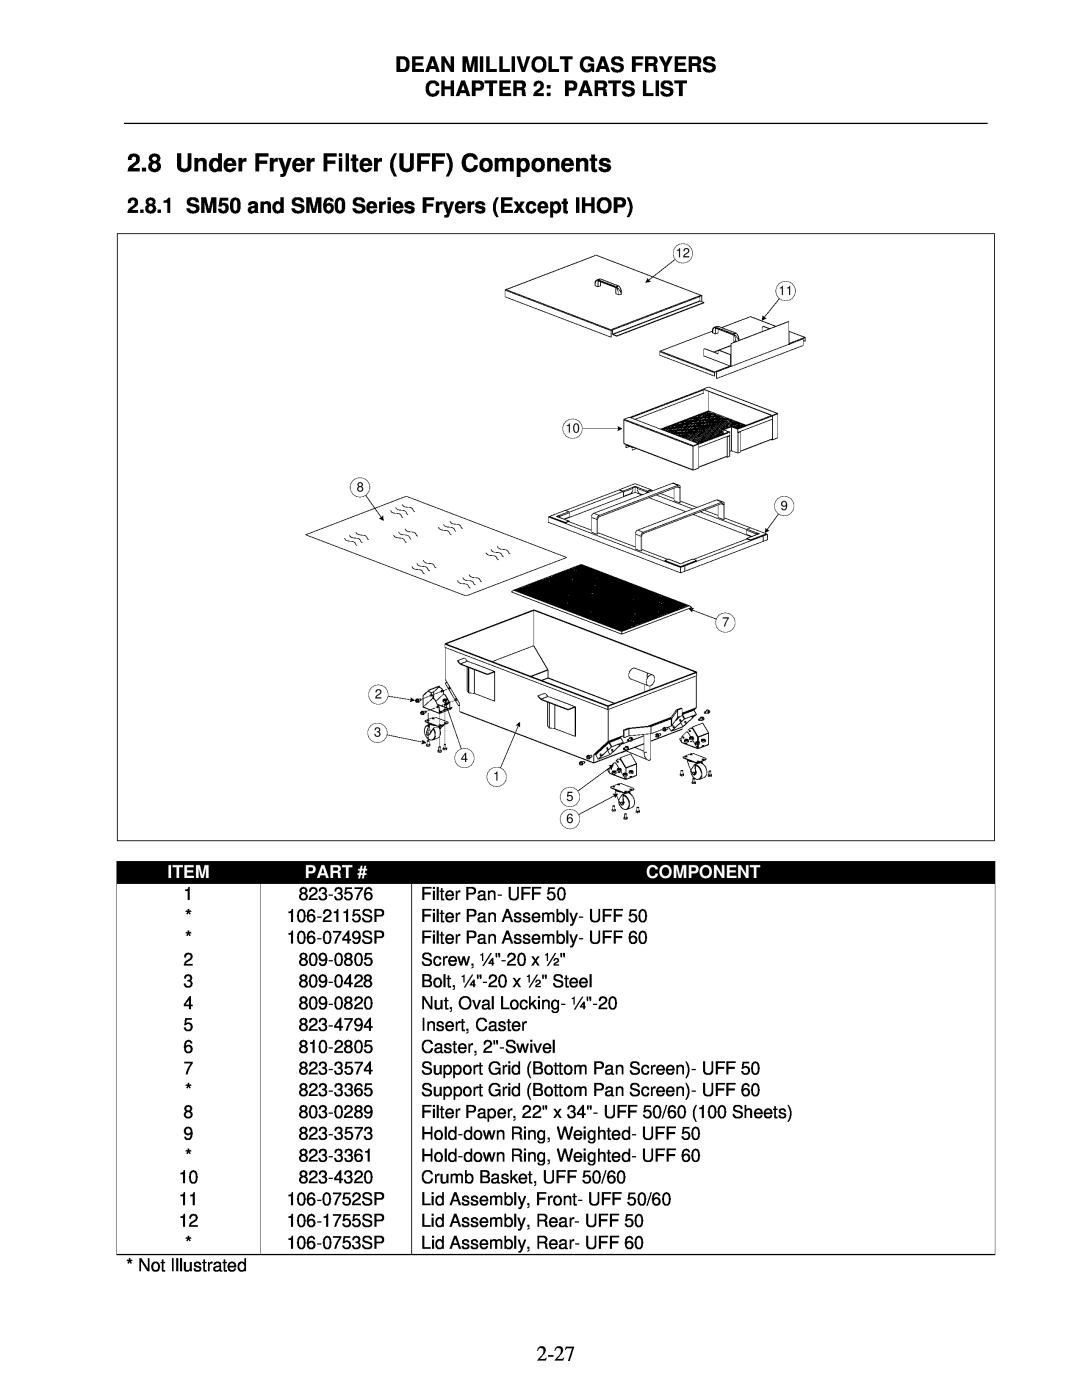 Frymaster Super Runner Series manual Under Fryer Filter UFF Components, 2.8.1 SM50 and SM60 Series Fryers Except IHOP, Item 